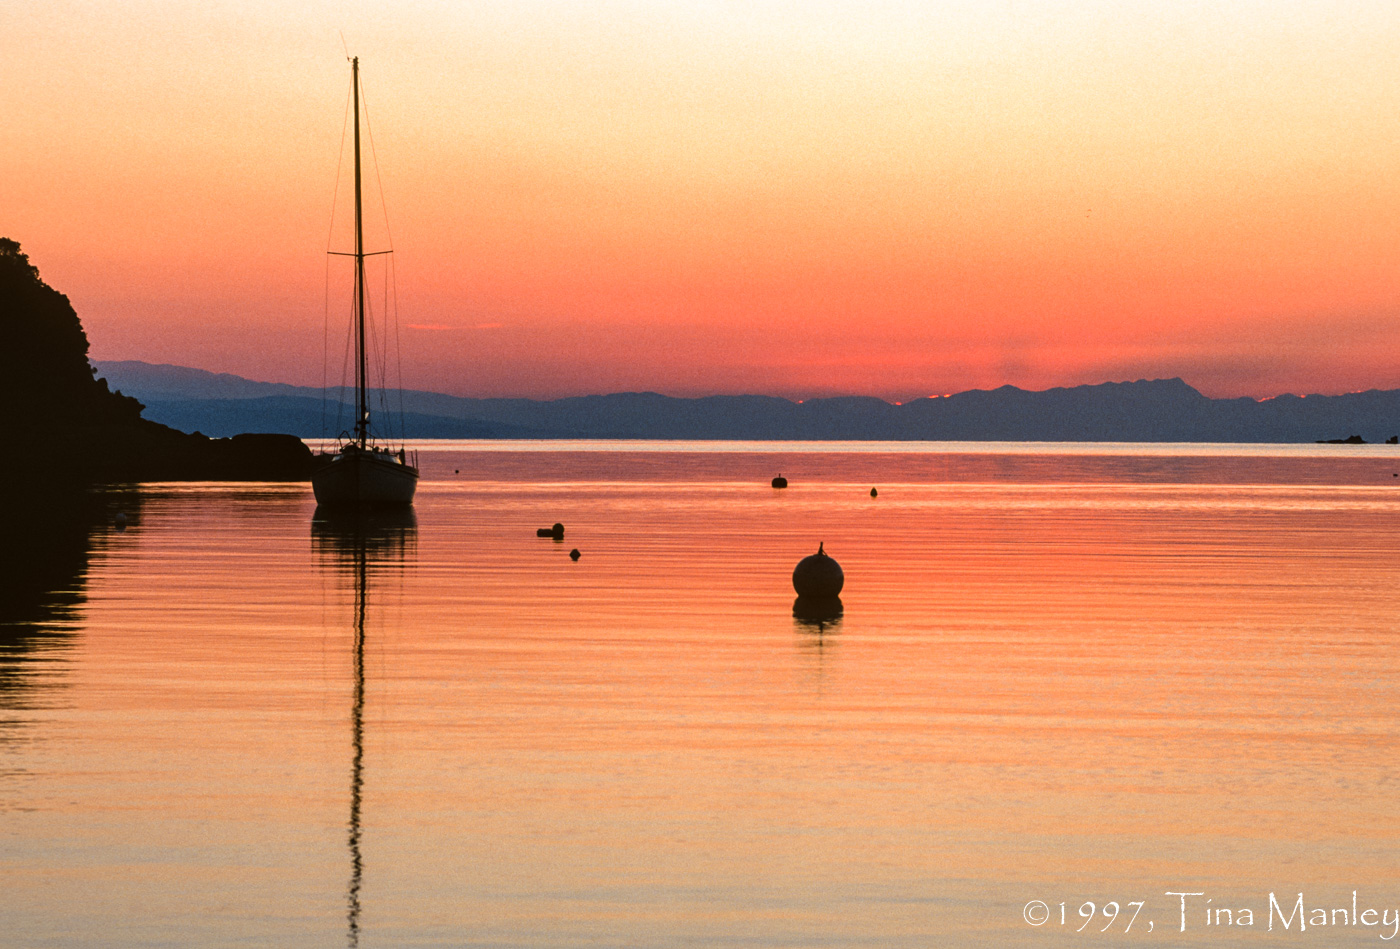 Sailboat Sunset